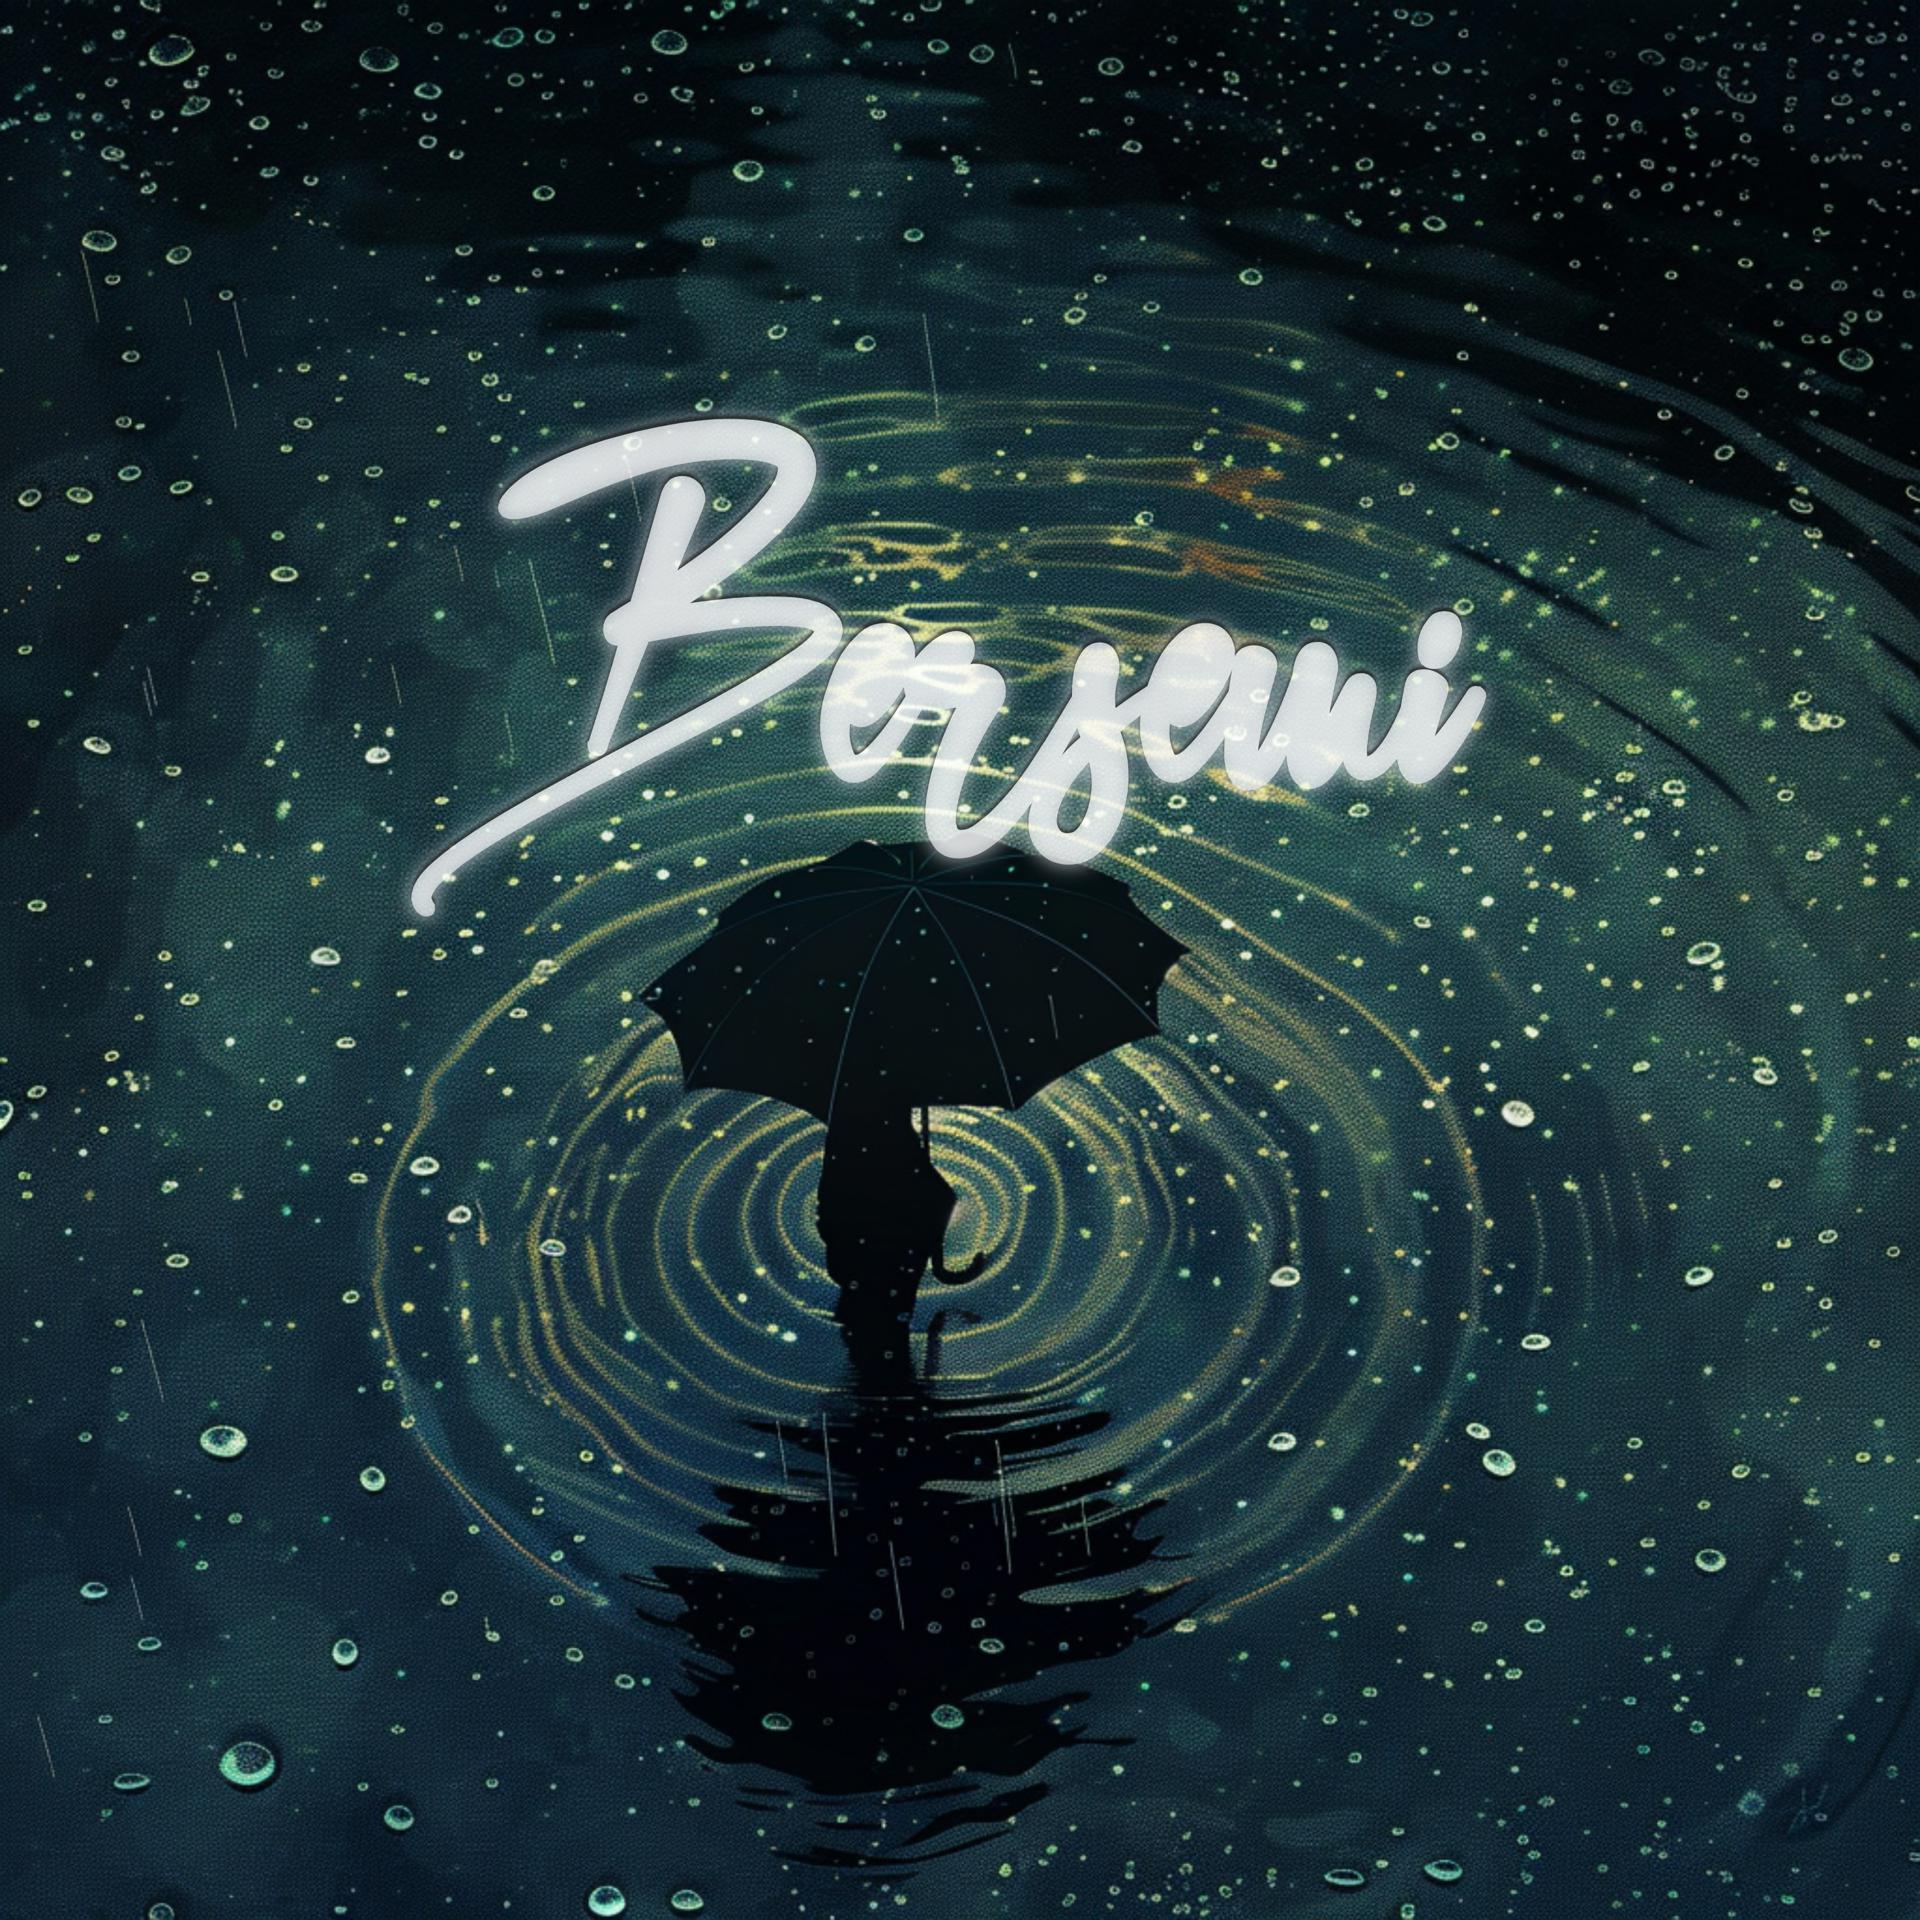 Постер альбома Bersemi